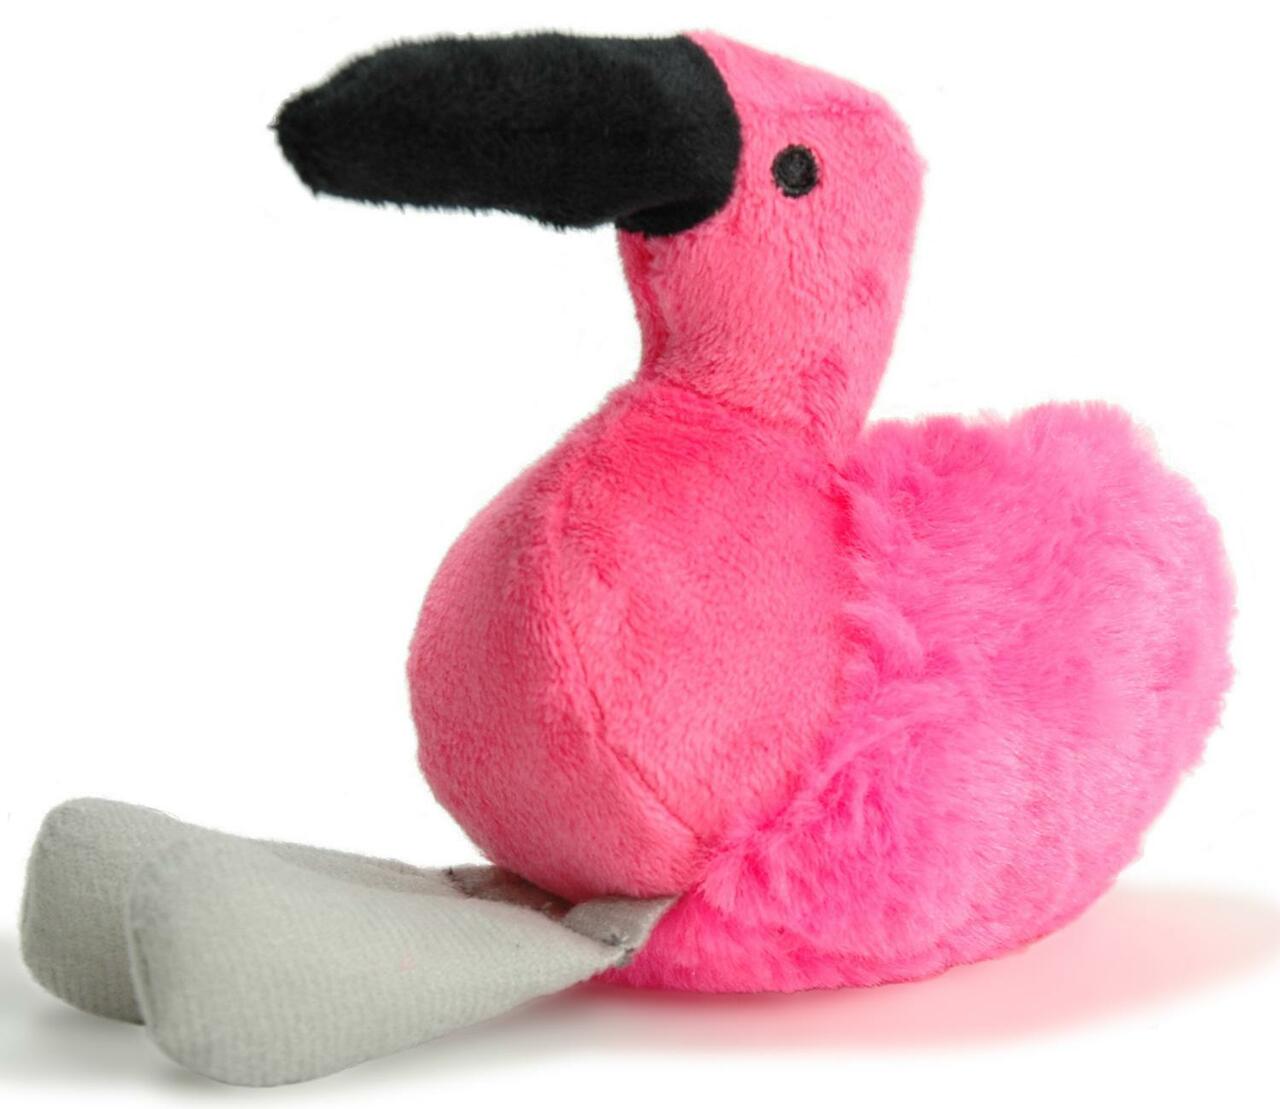 TinyToy Plush Flamingo Very Small Dog Toy